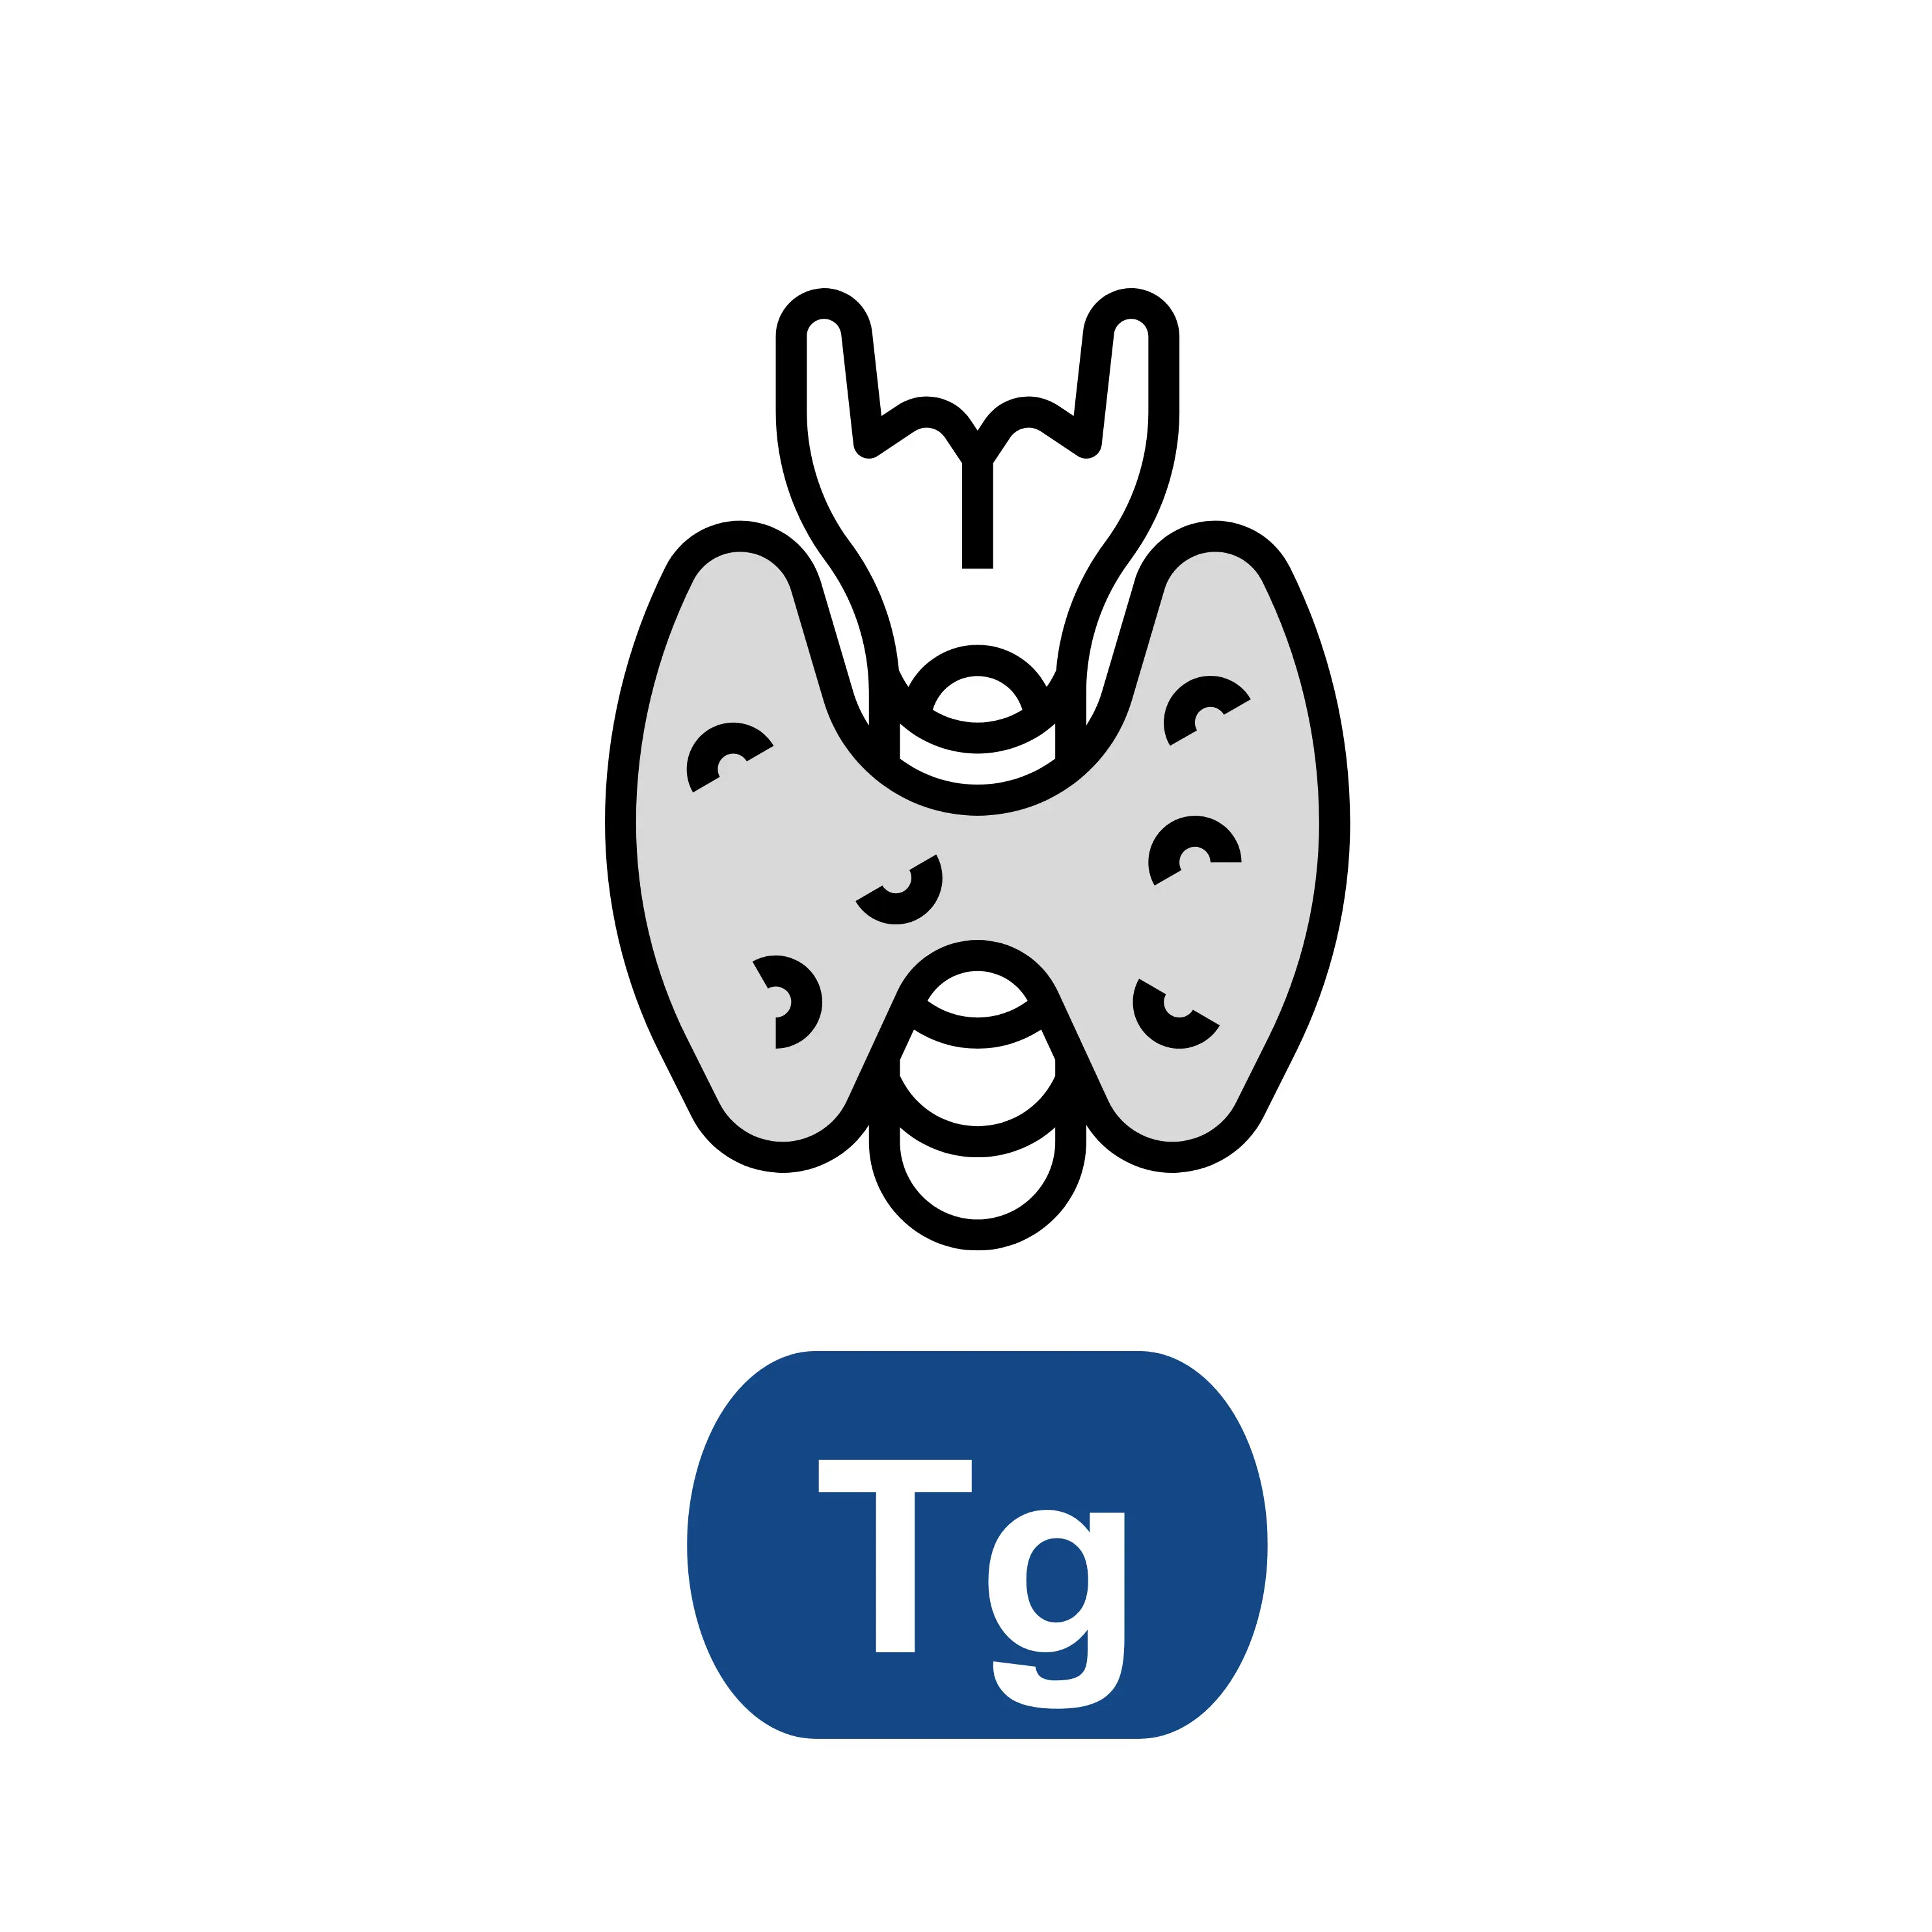 Thyroglobulin (Tg)